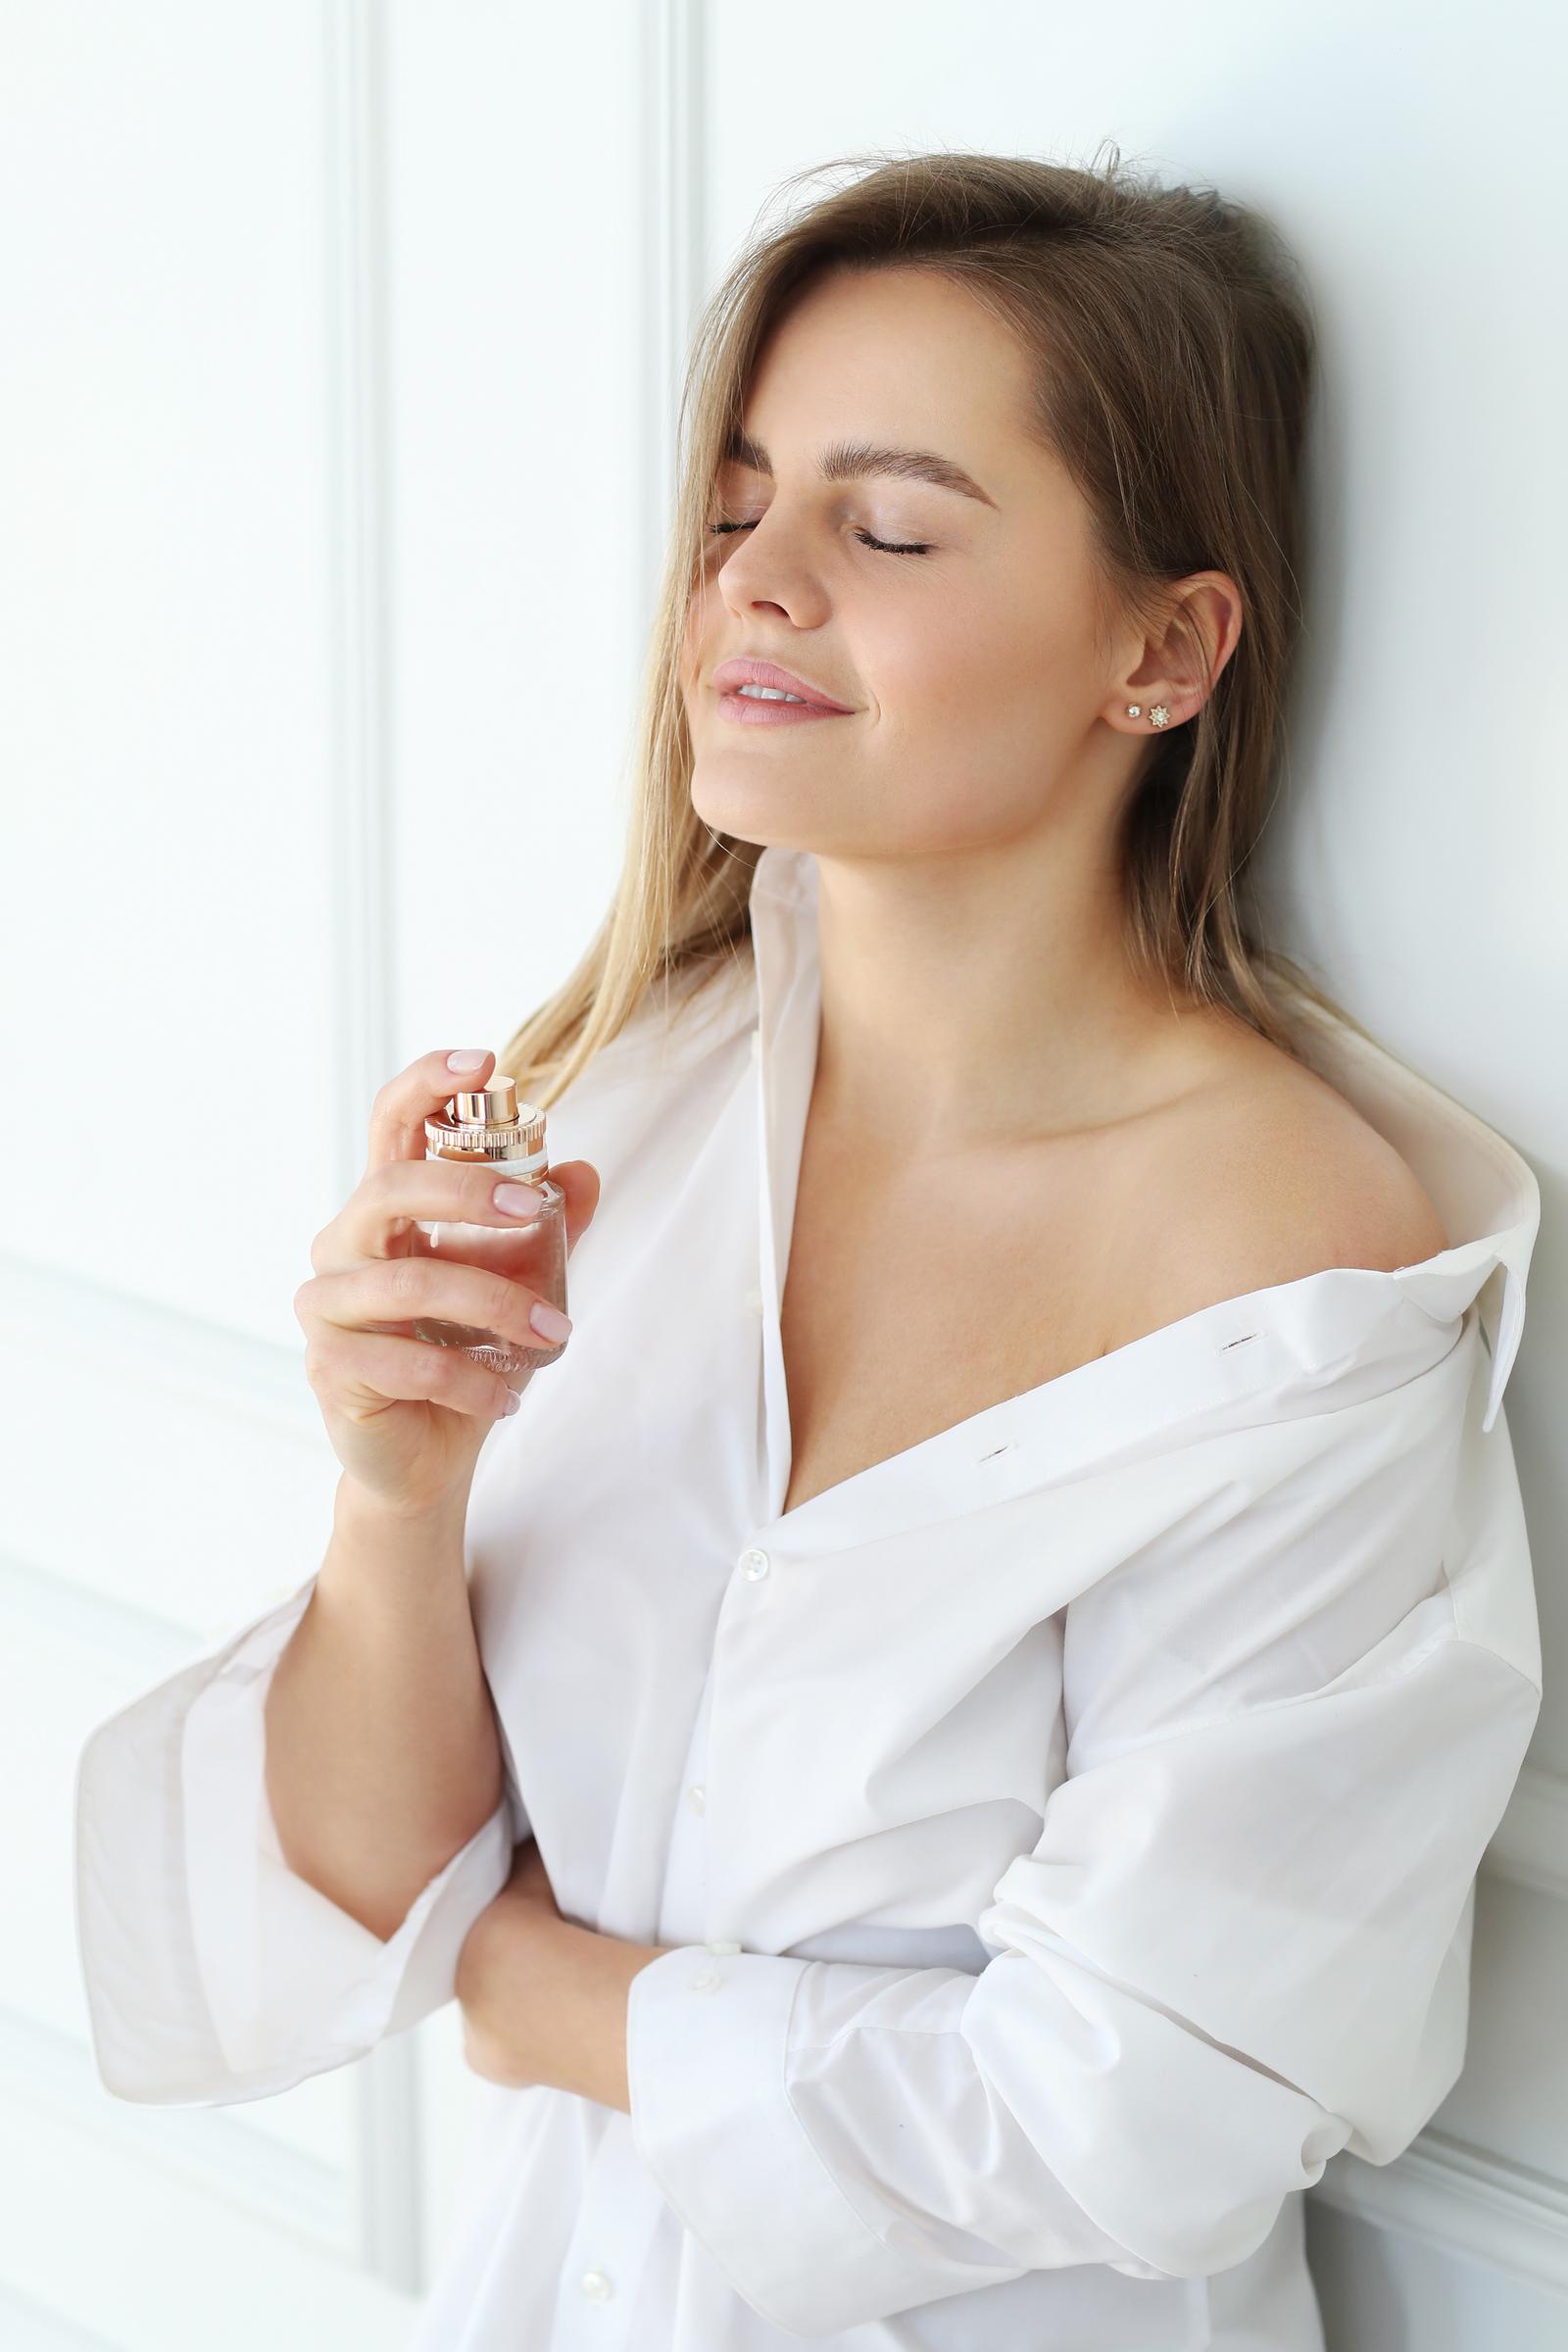 A young woman applying perfume | Source: Freepik